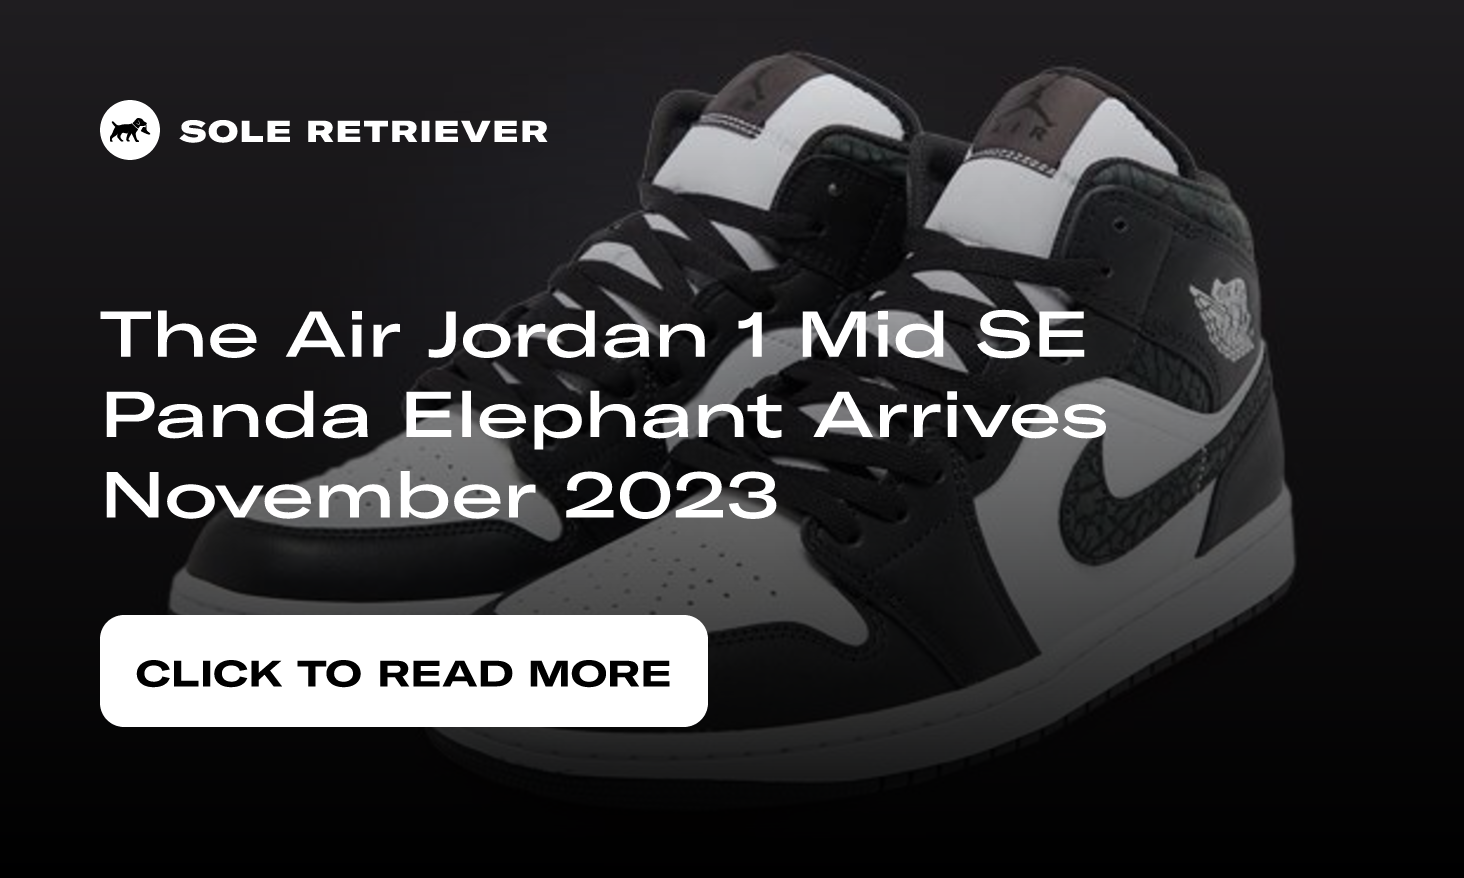 The Air Jordan 1 Mid SE Panda Elephant Arrives November 2023